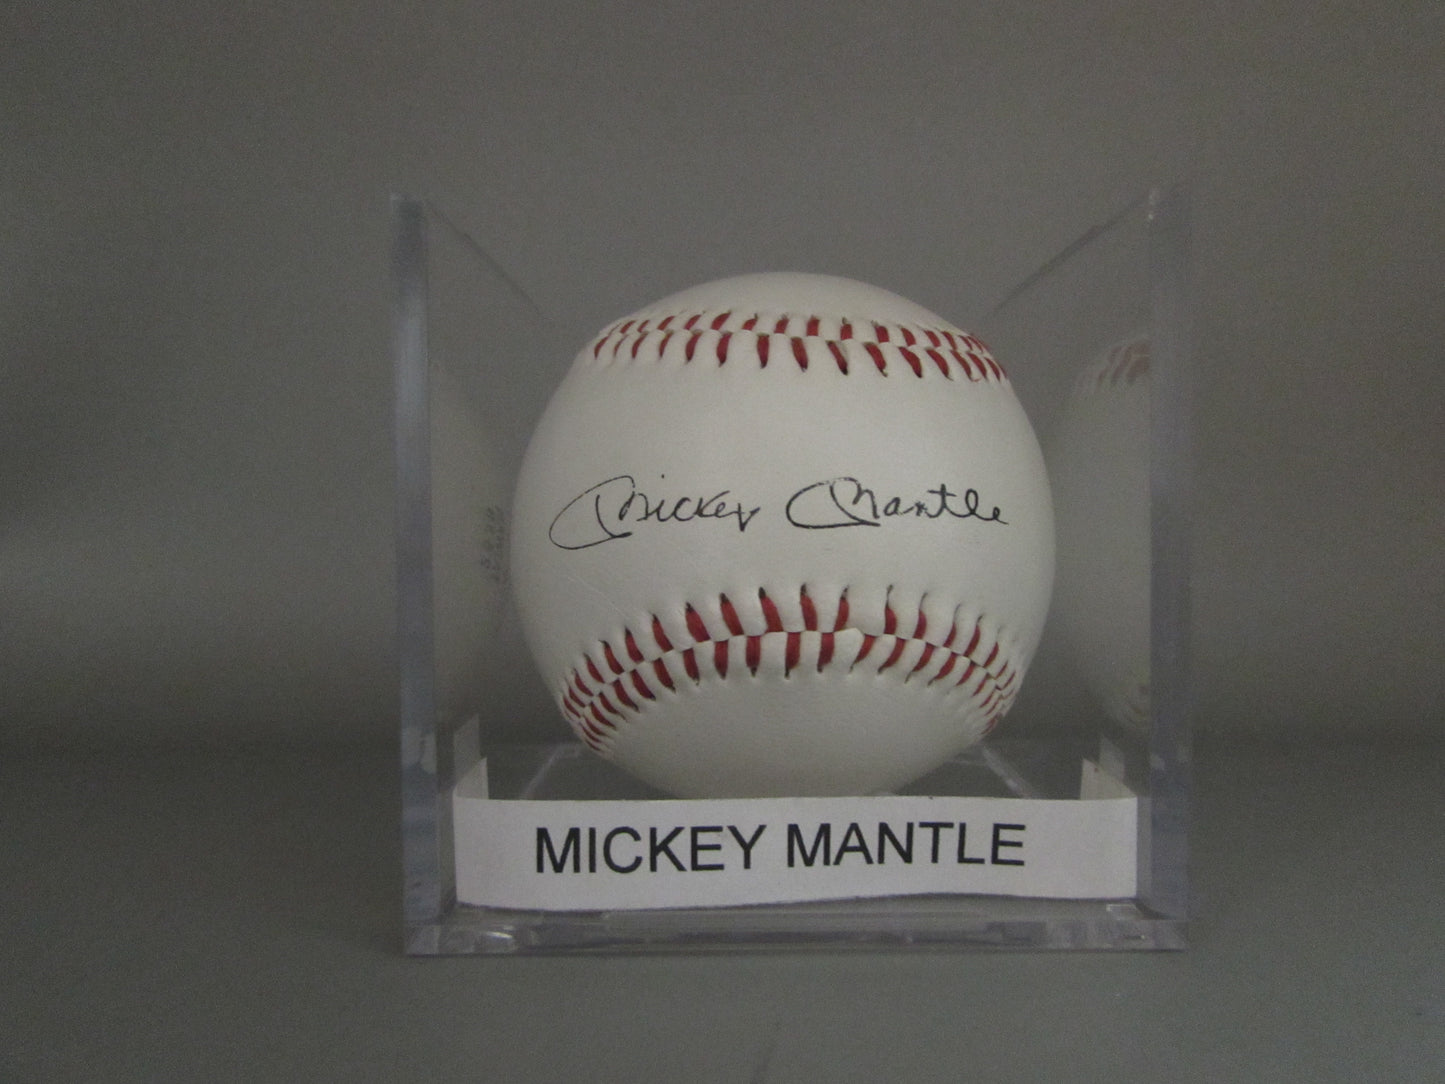 Mickey Mantle signed baseball (facsimile)